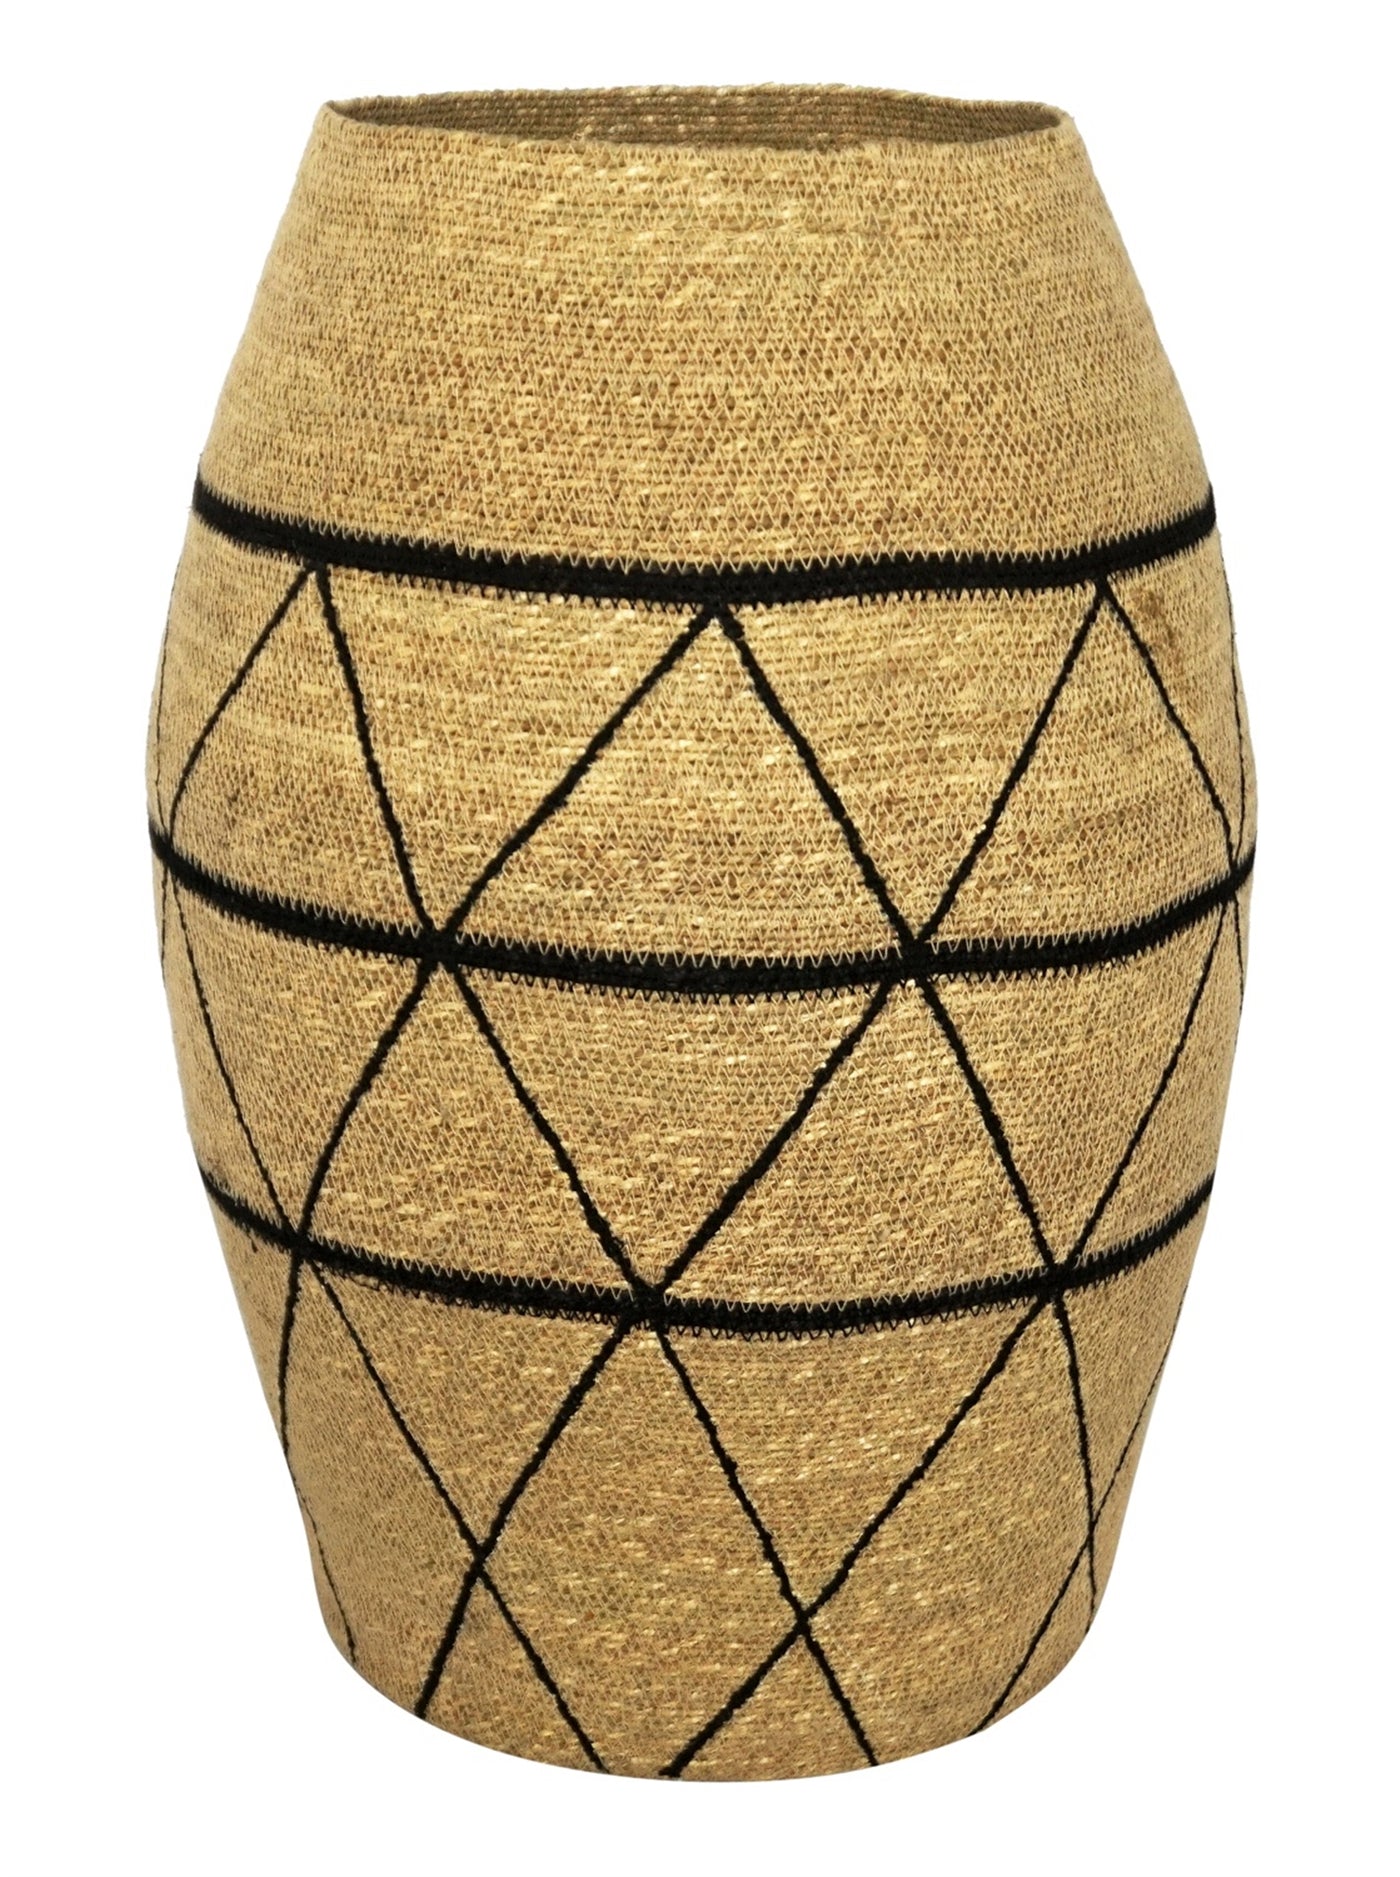 Seagrass Basket with Black X Design 10"